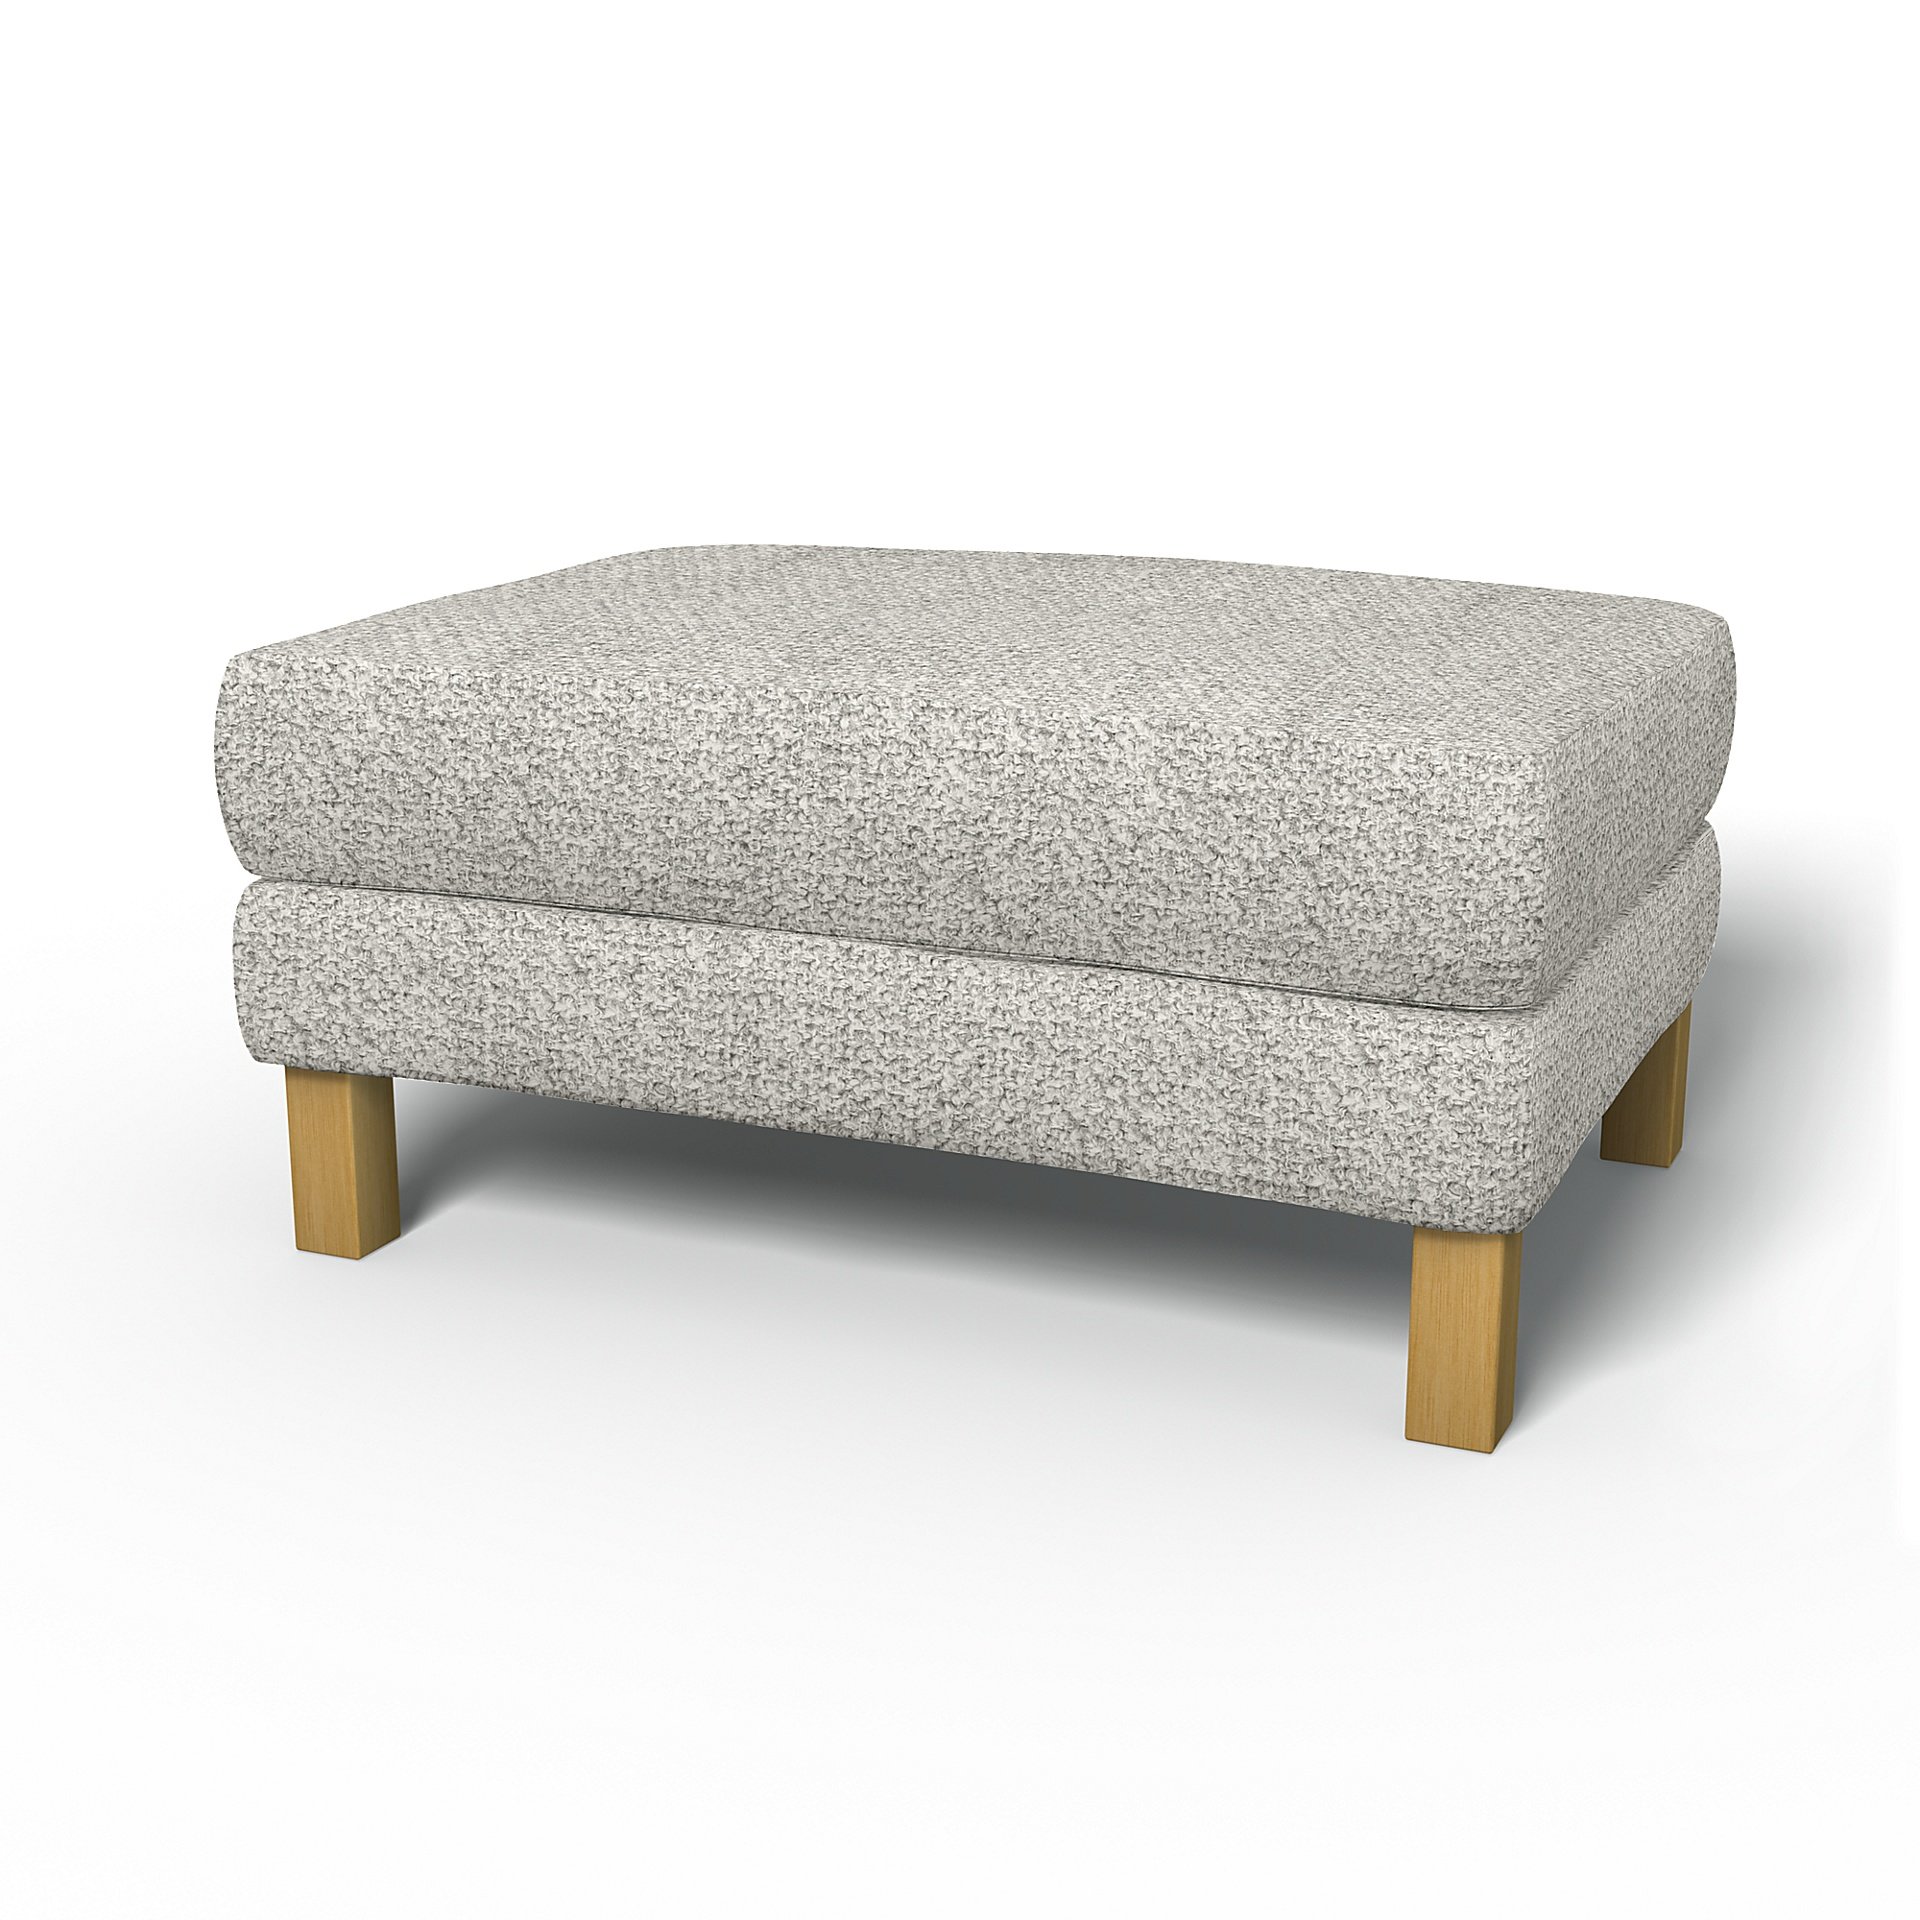 IKEA - Karlstad Footstool Cover, Driftwood, Boucle & Texture - Bemz